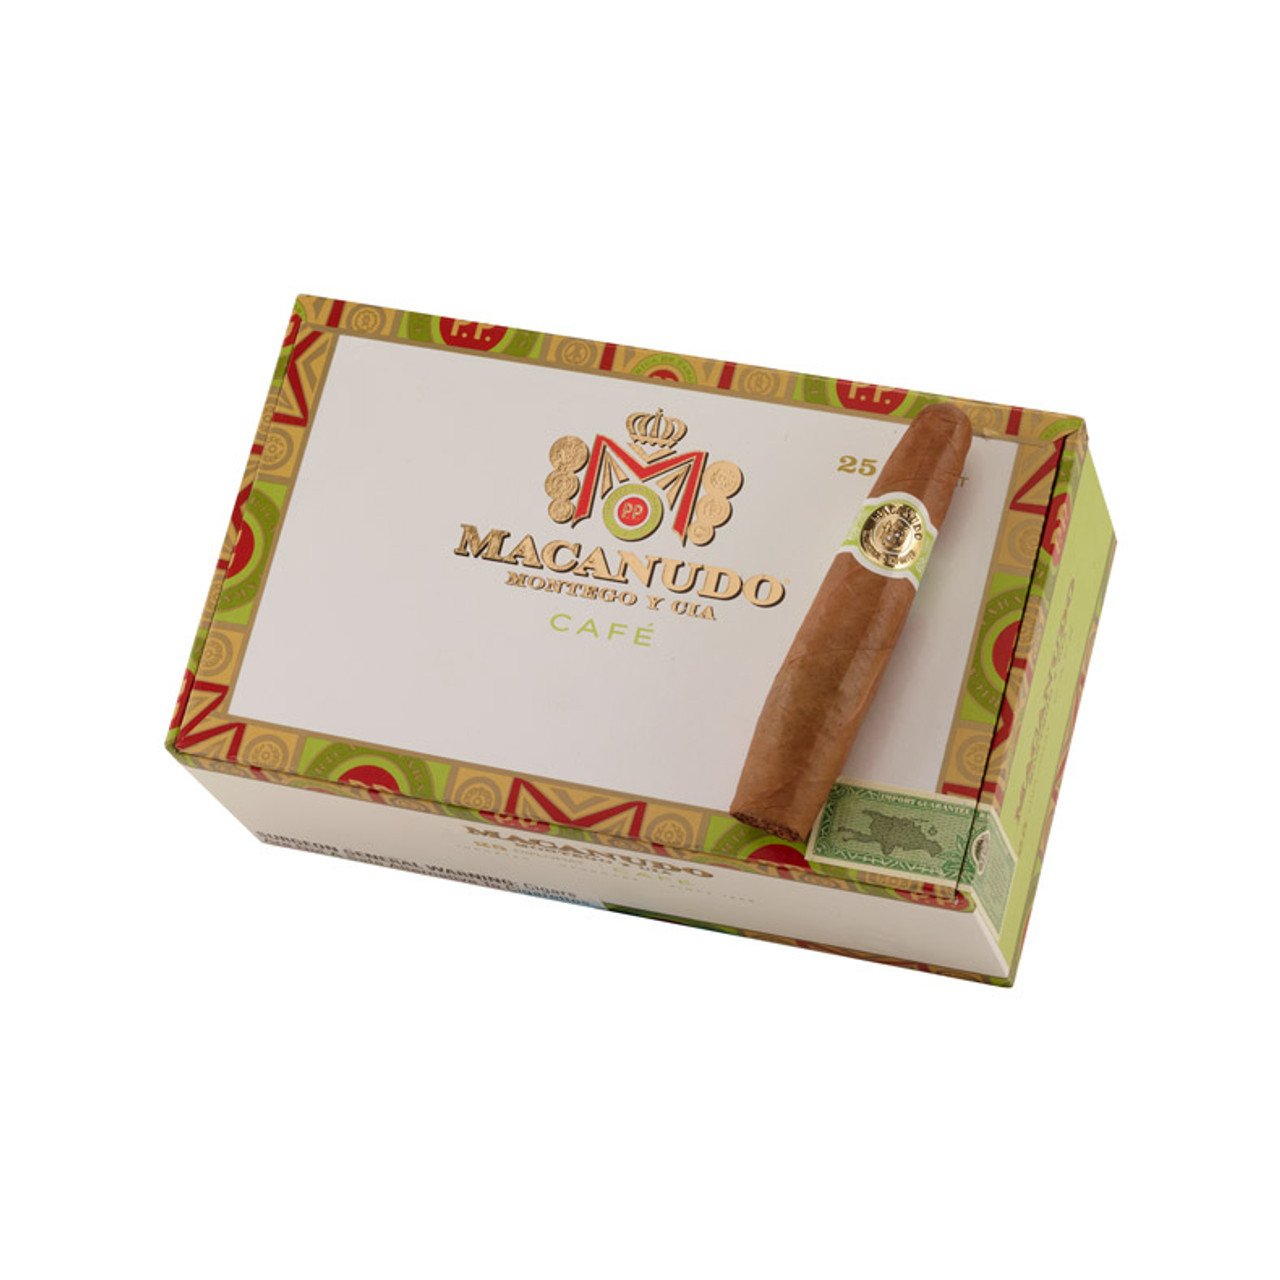 Macanudo Diplomat Cigars - 4.5 x 60 (Box of 25) *Box